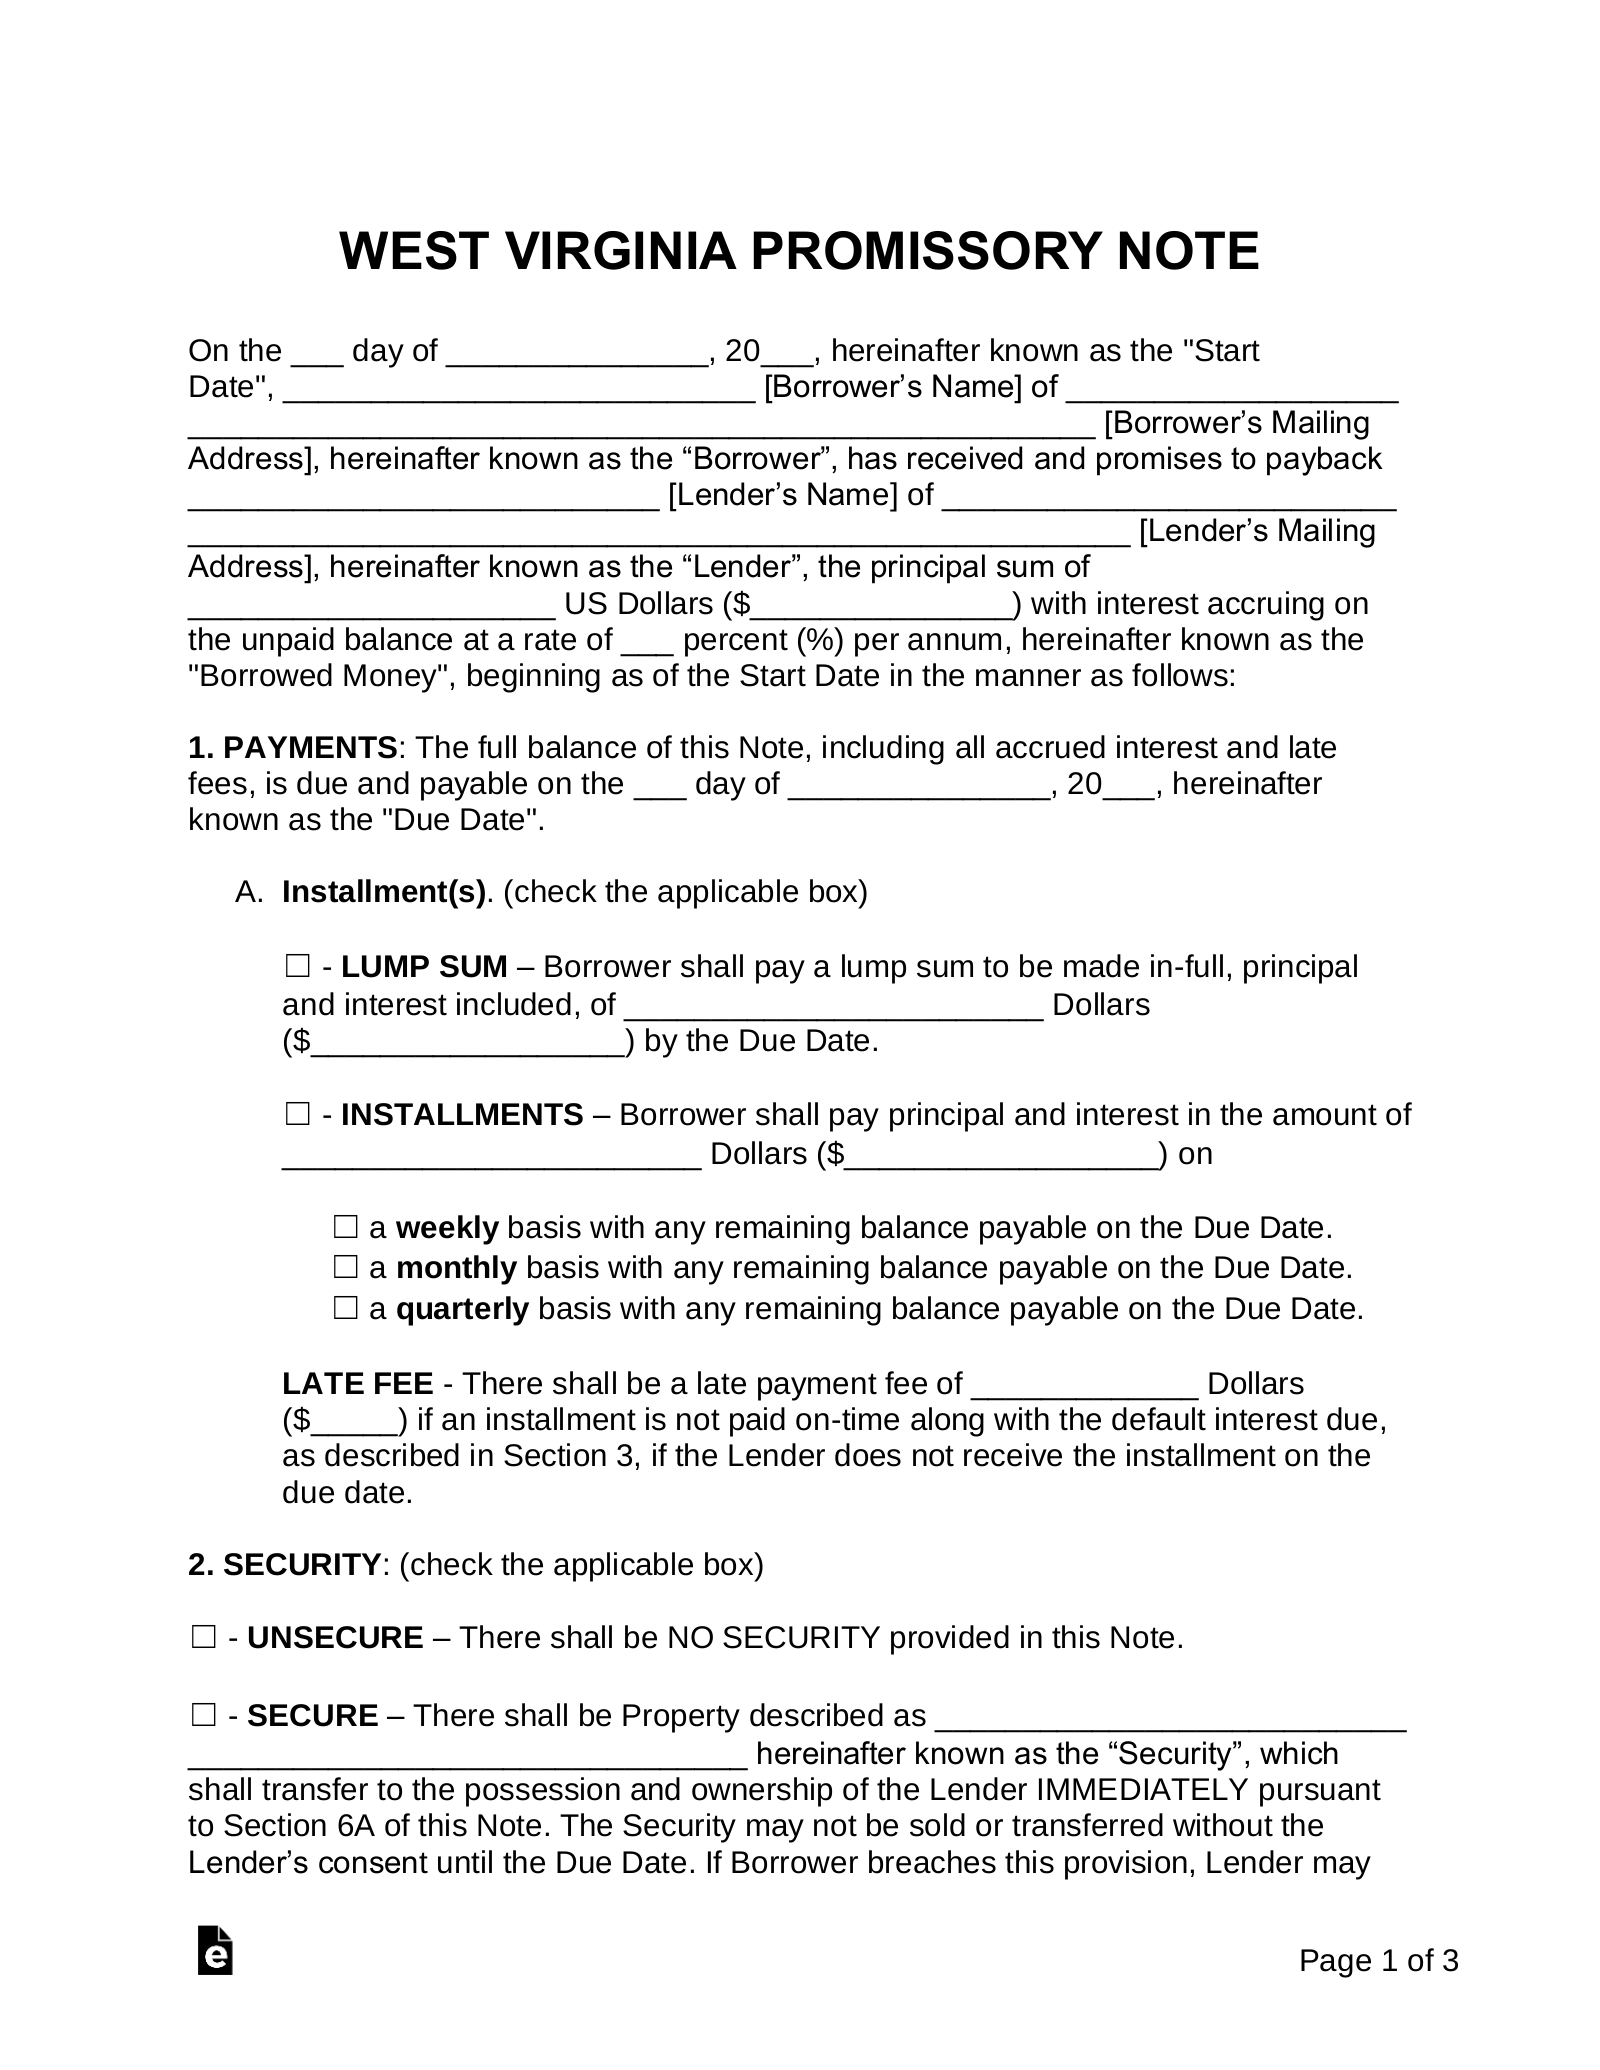 West Virginia Promissory Note Templates (2)